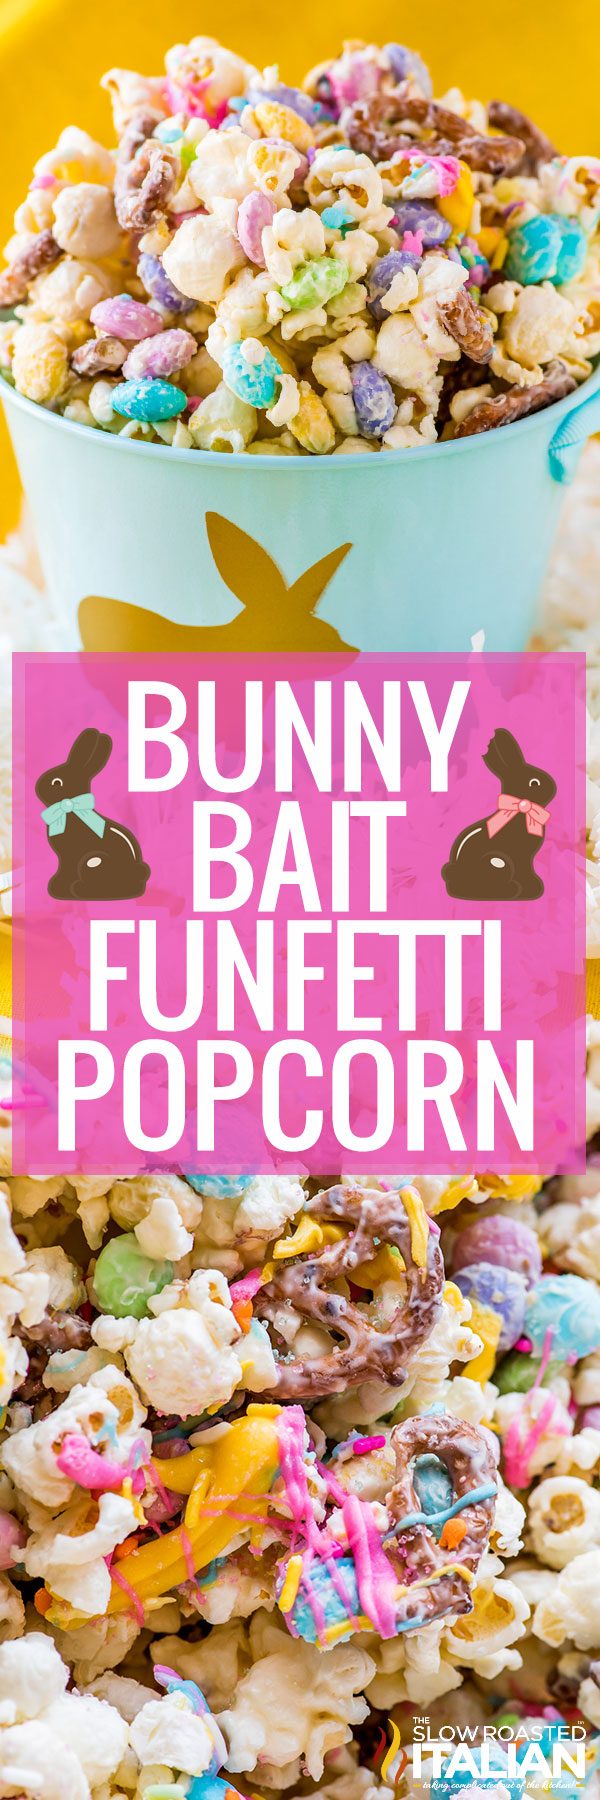 bunny bait funfetti popcorn